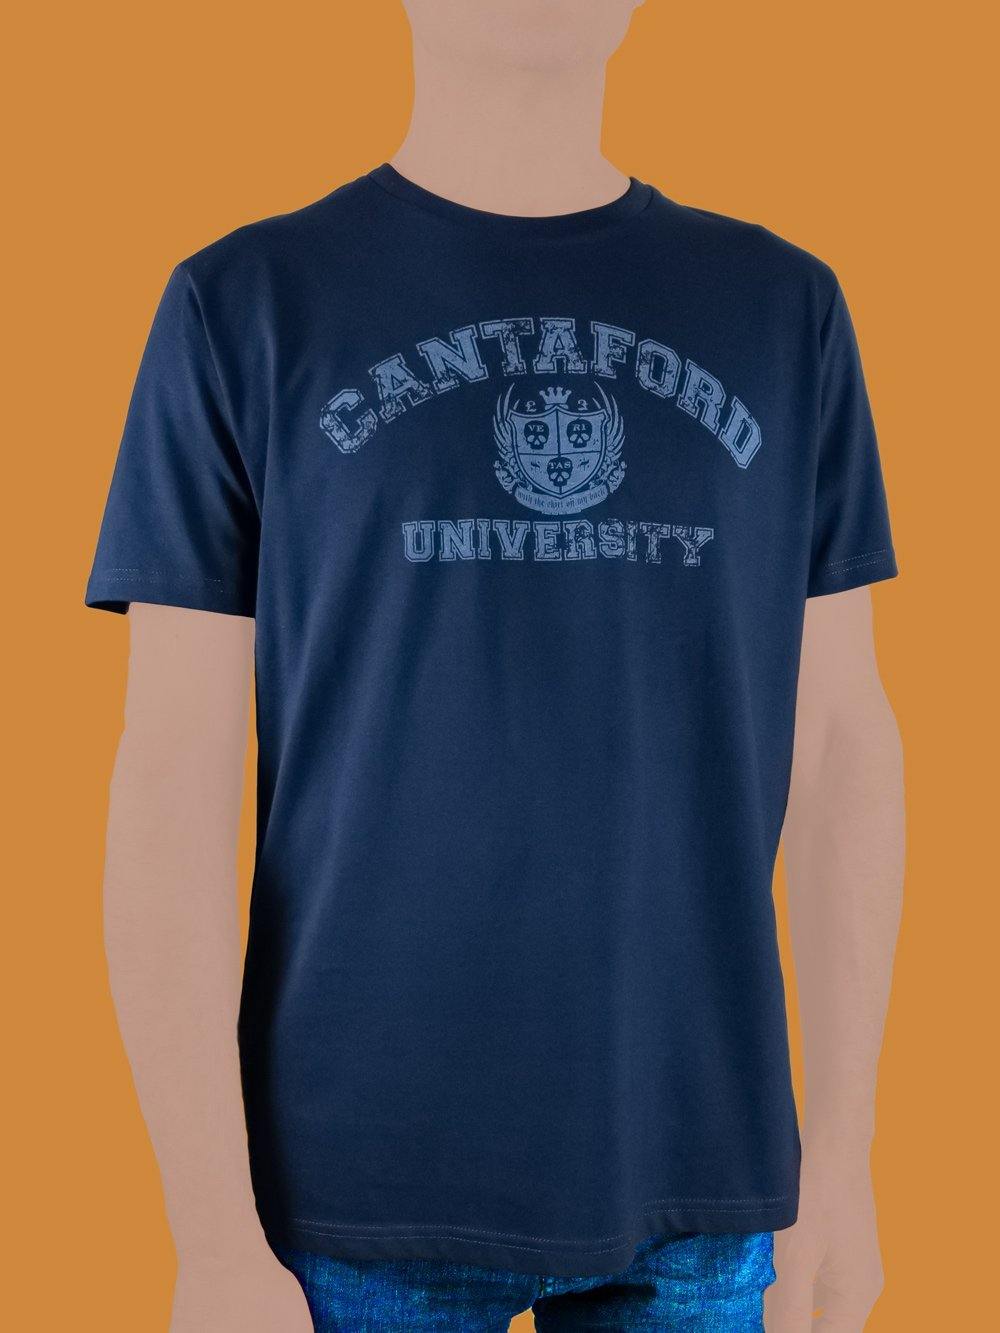 Cantaford University t-shirt hand printed 100% organic cotton t-shirt